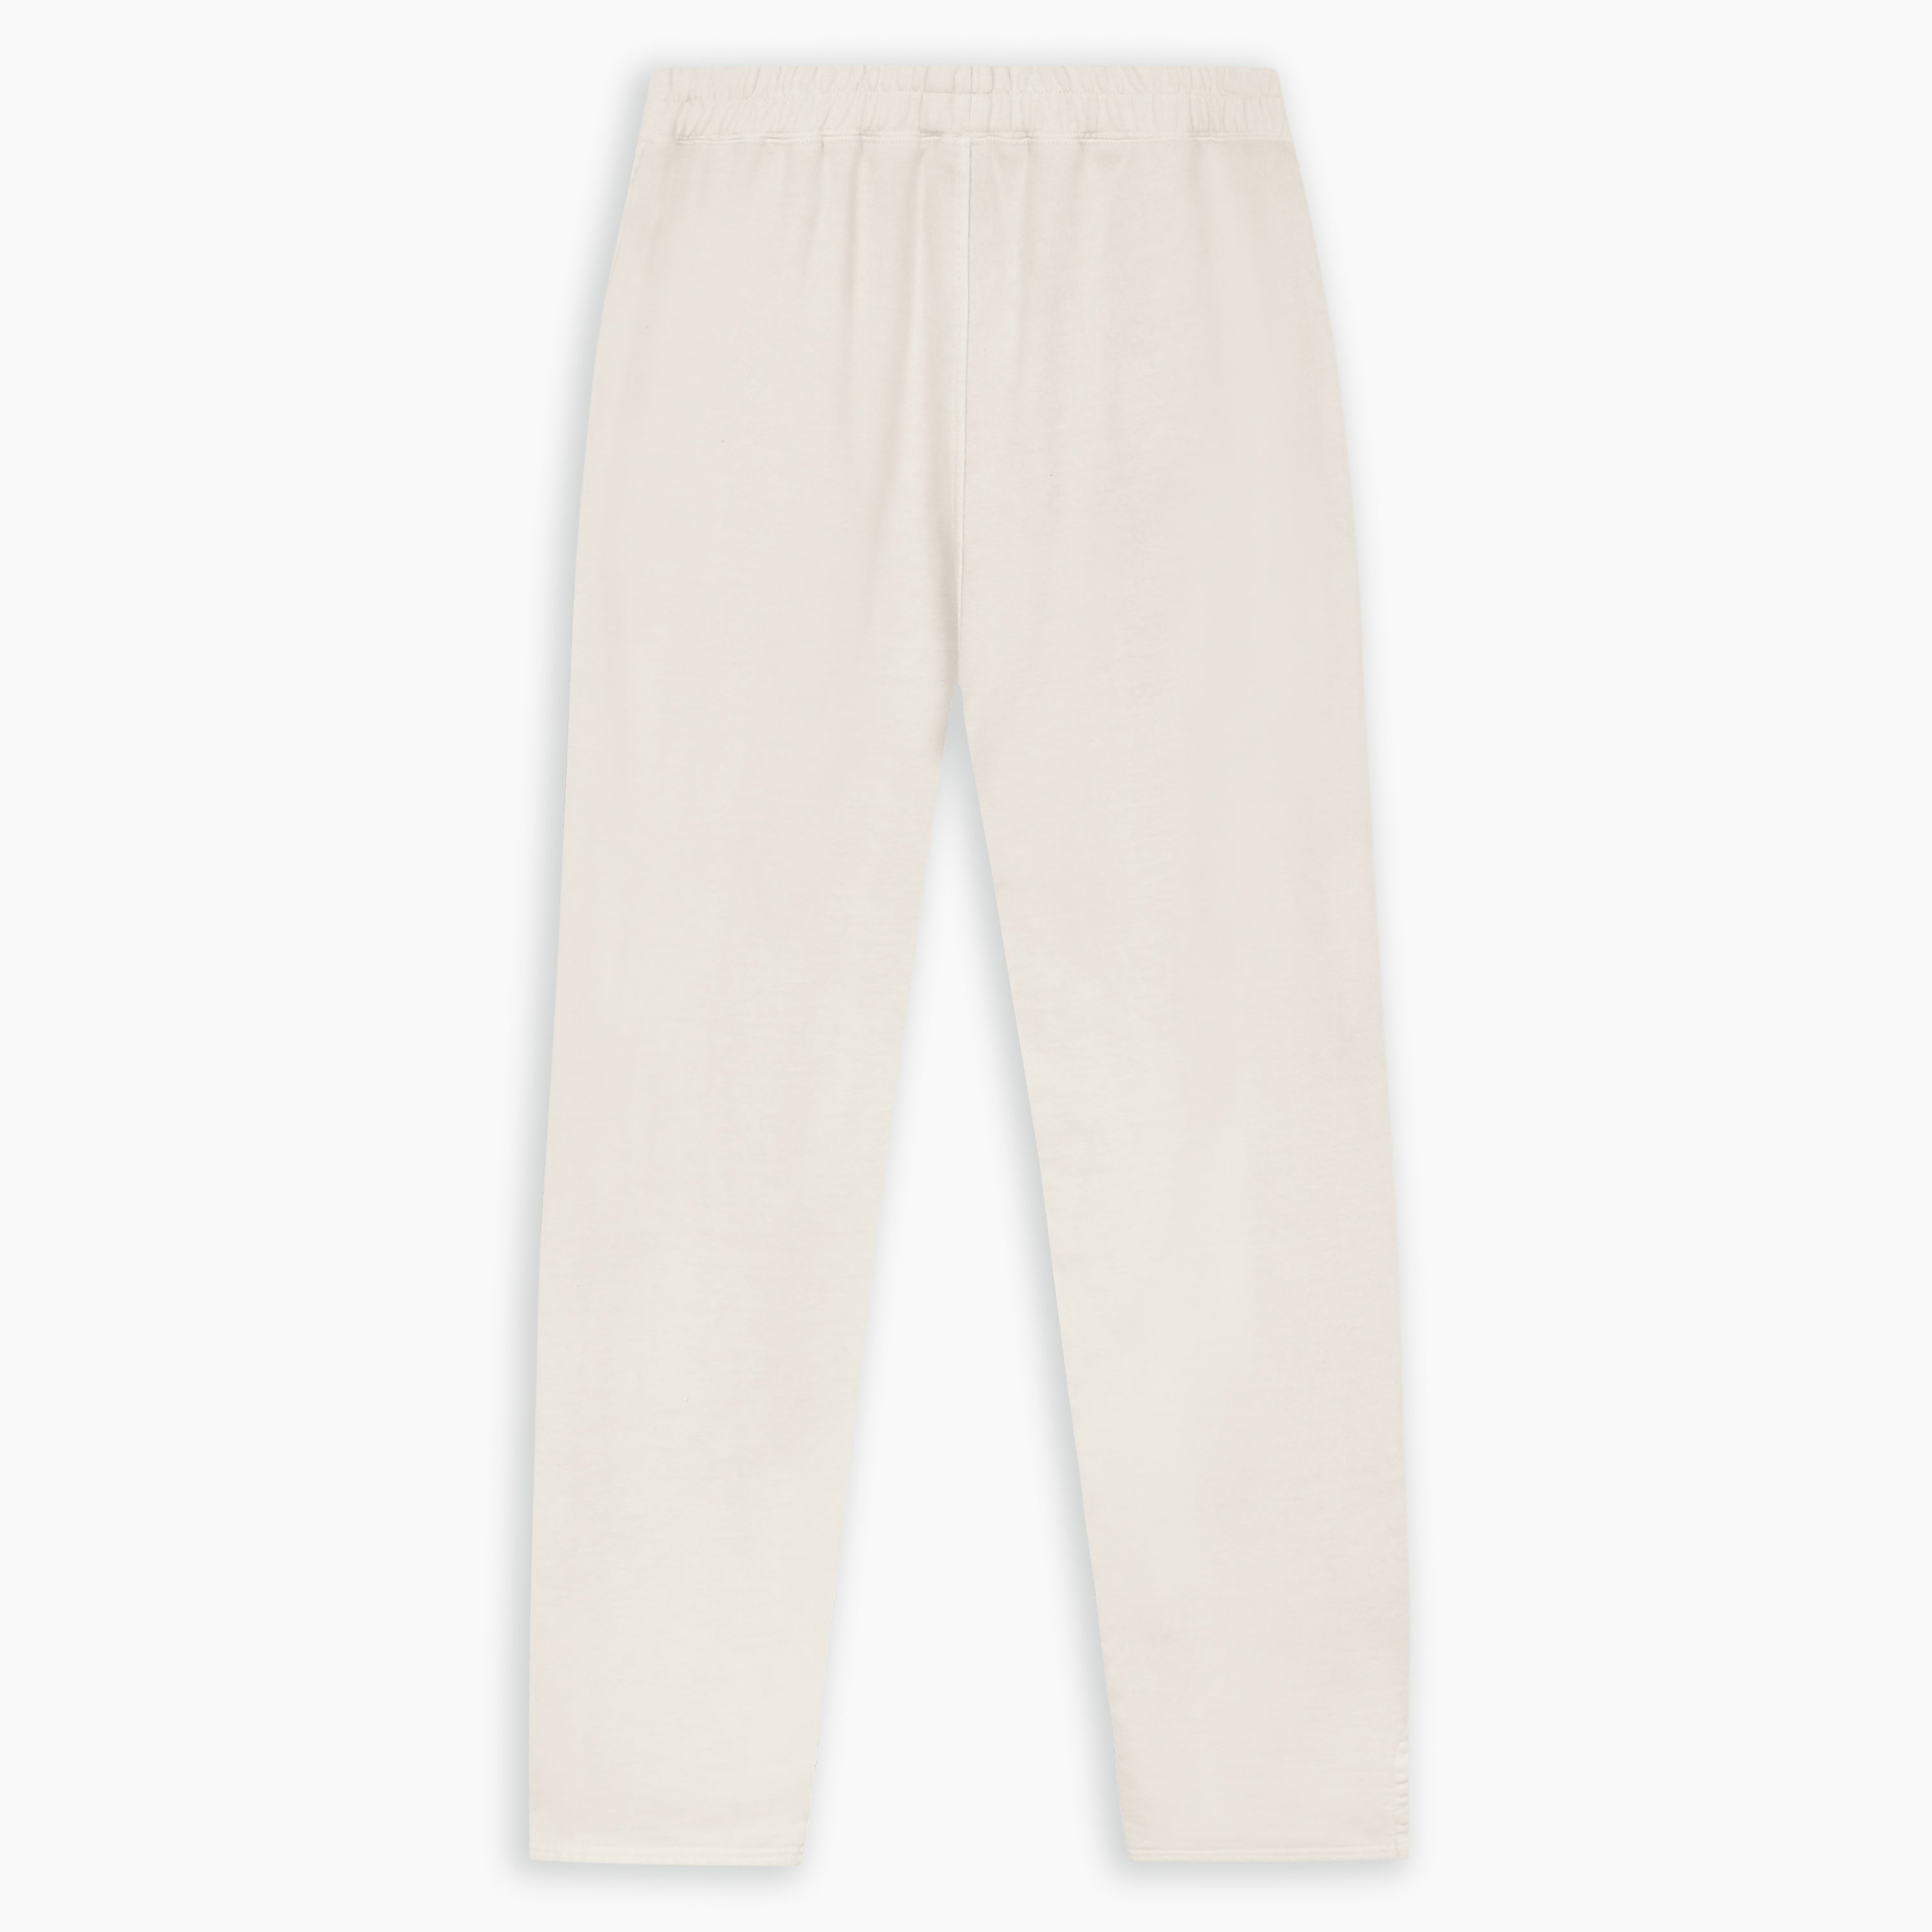 Atonement Split Pants - Vintage White